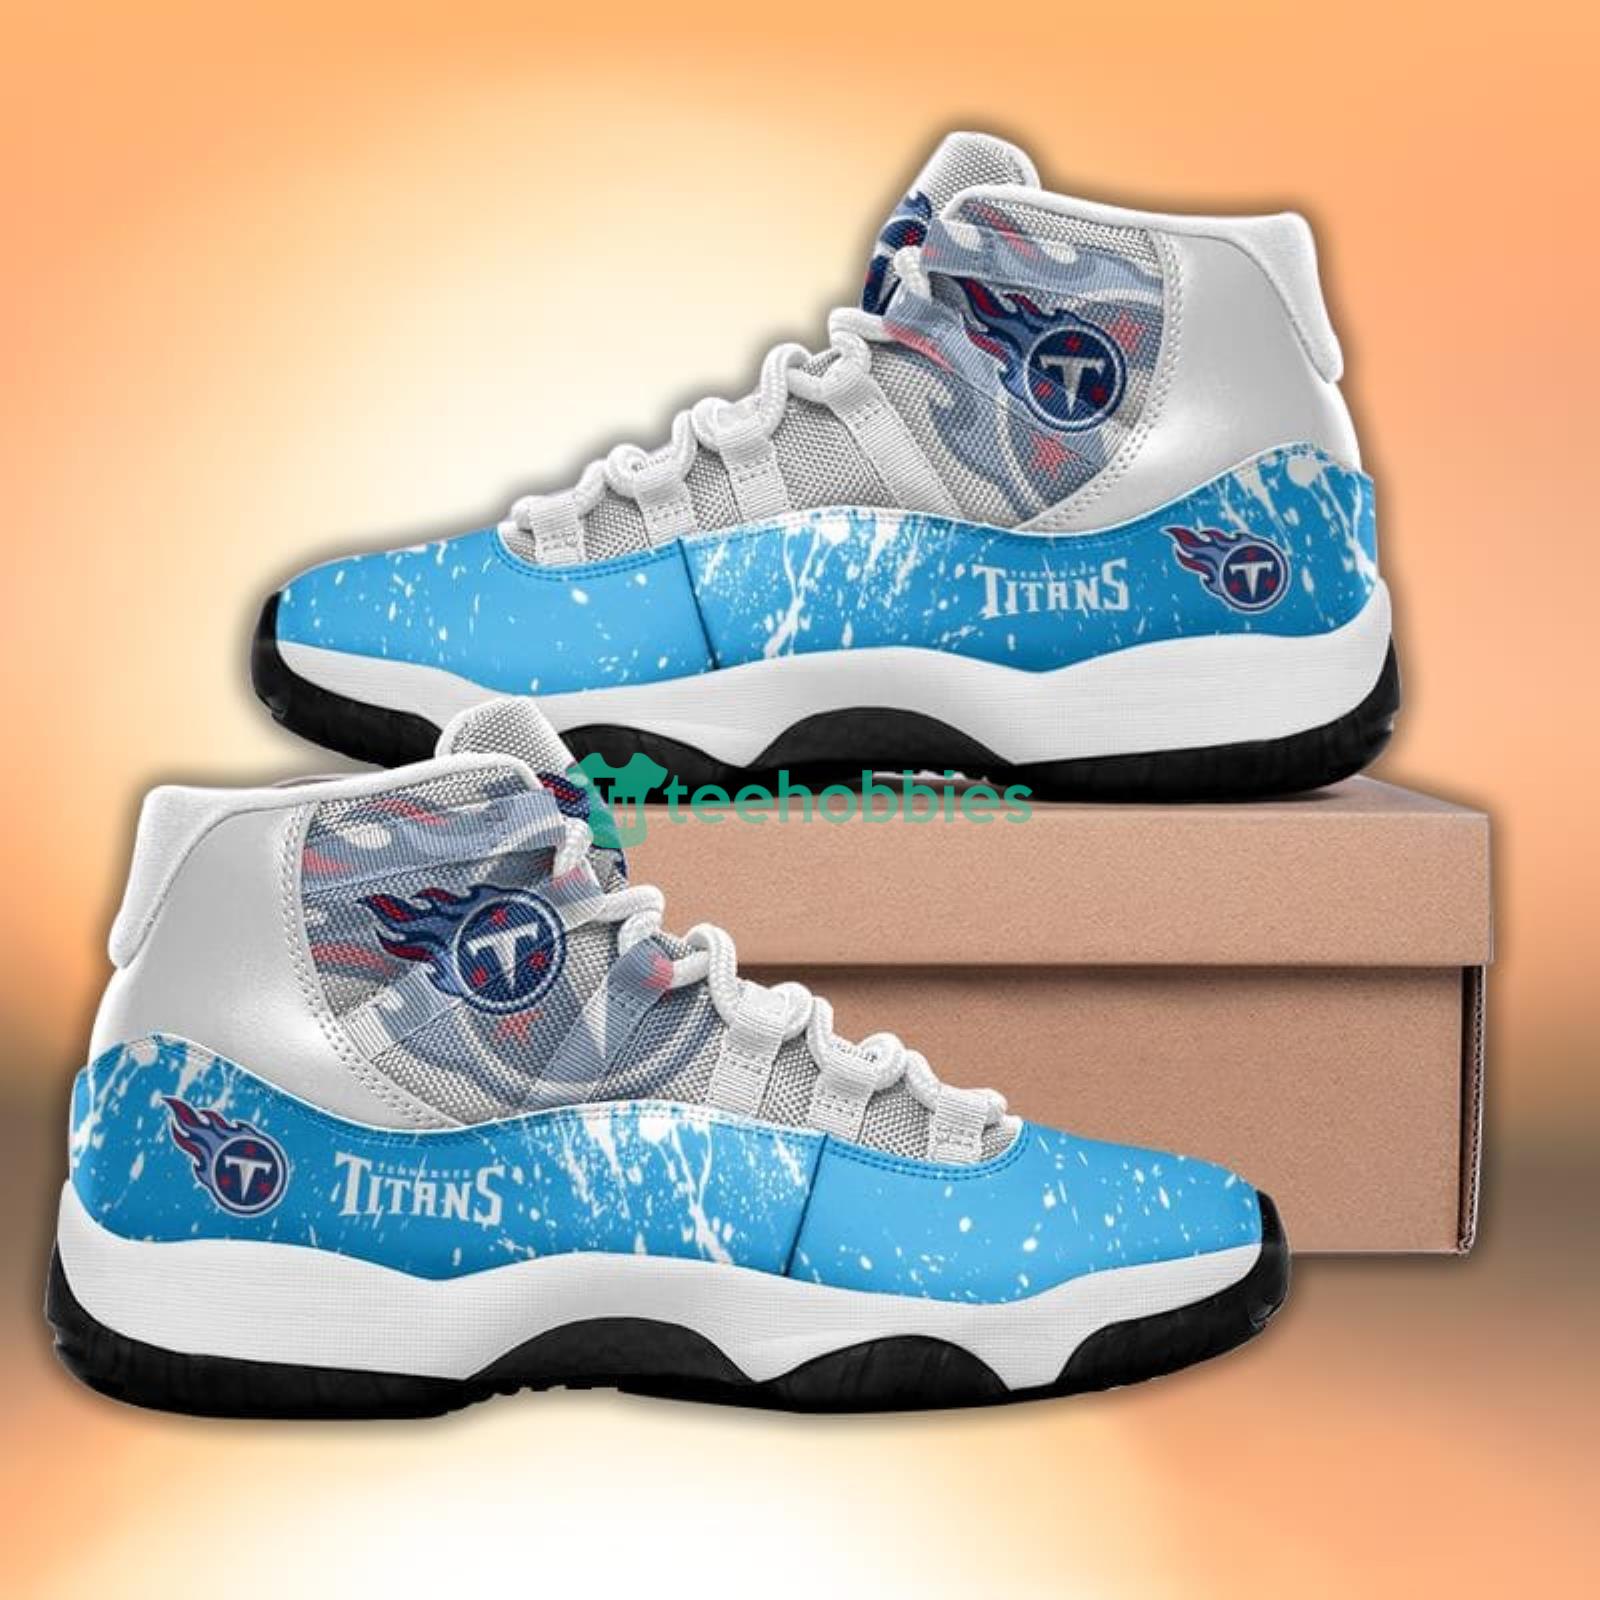 Tennessee Titans Paint Flakes Pattern Style Sneaker Air Jordan 11